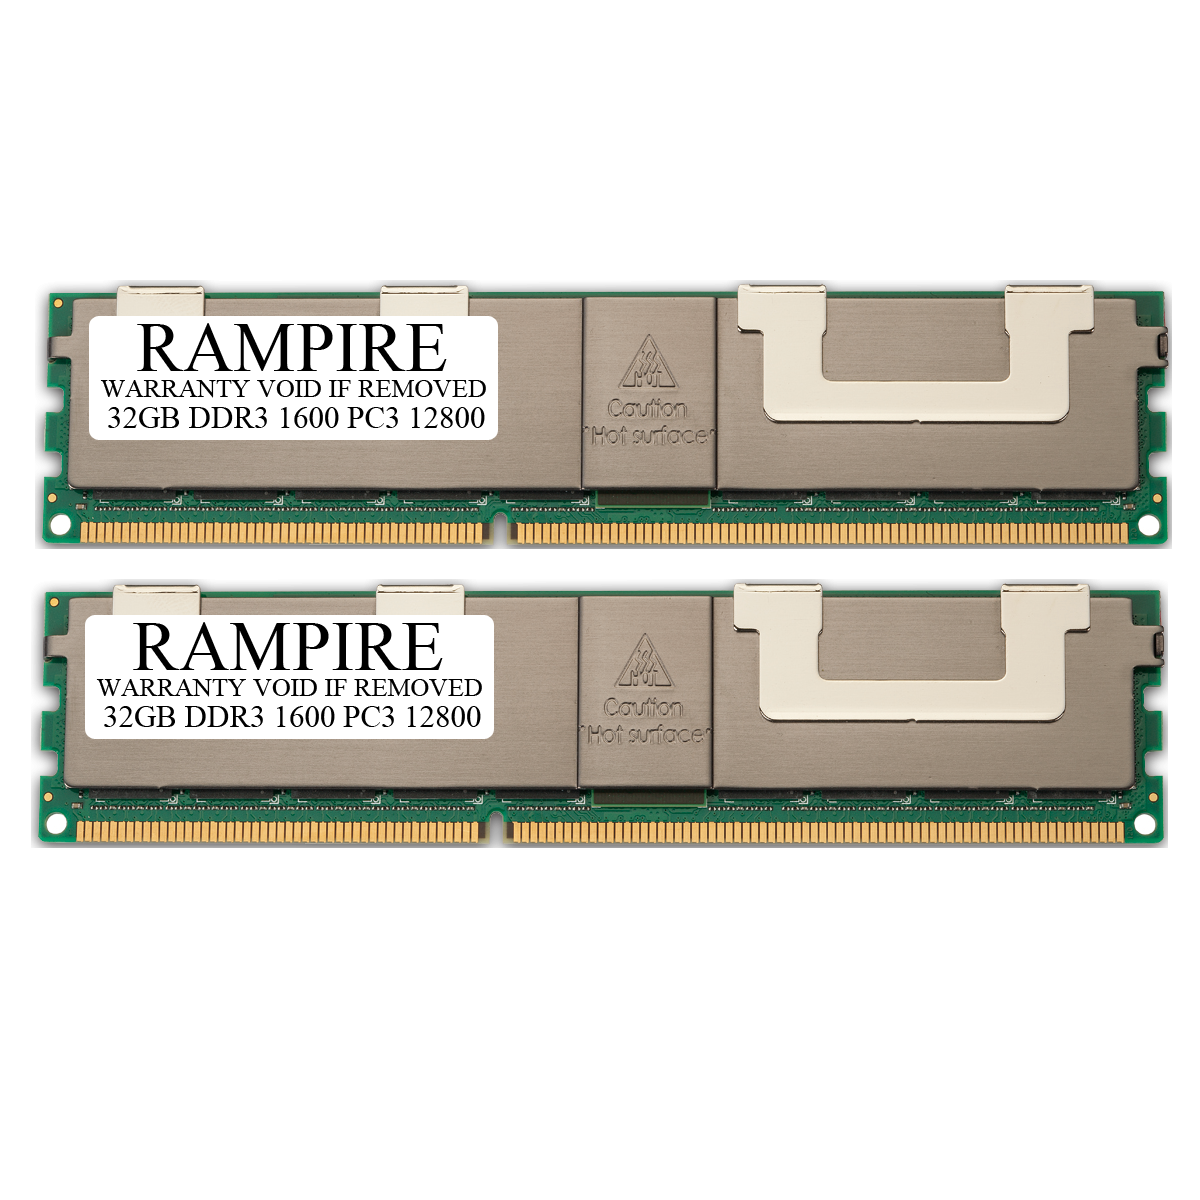 RAMPIRE 64GB (2 x 32GB) DDR3 1600 (PC3 12800) 240-Pin SDRAM 2Rx4 Standard Profile 1.35V ECC Load Reduced Server Memory